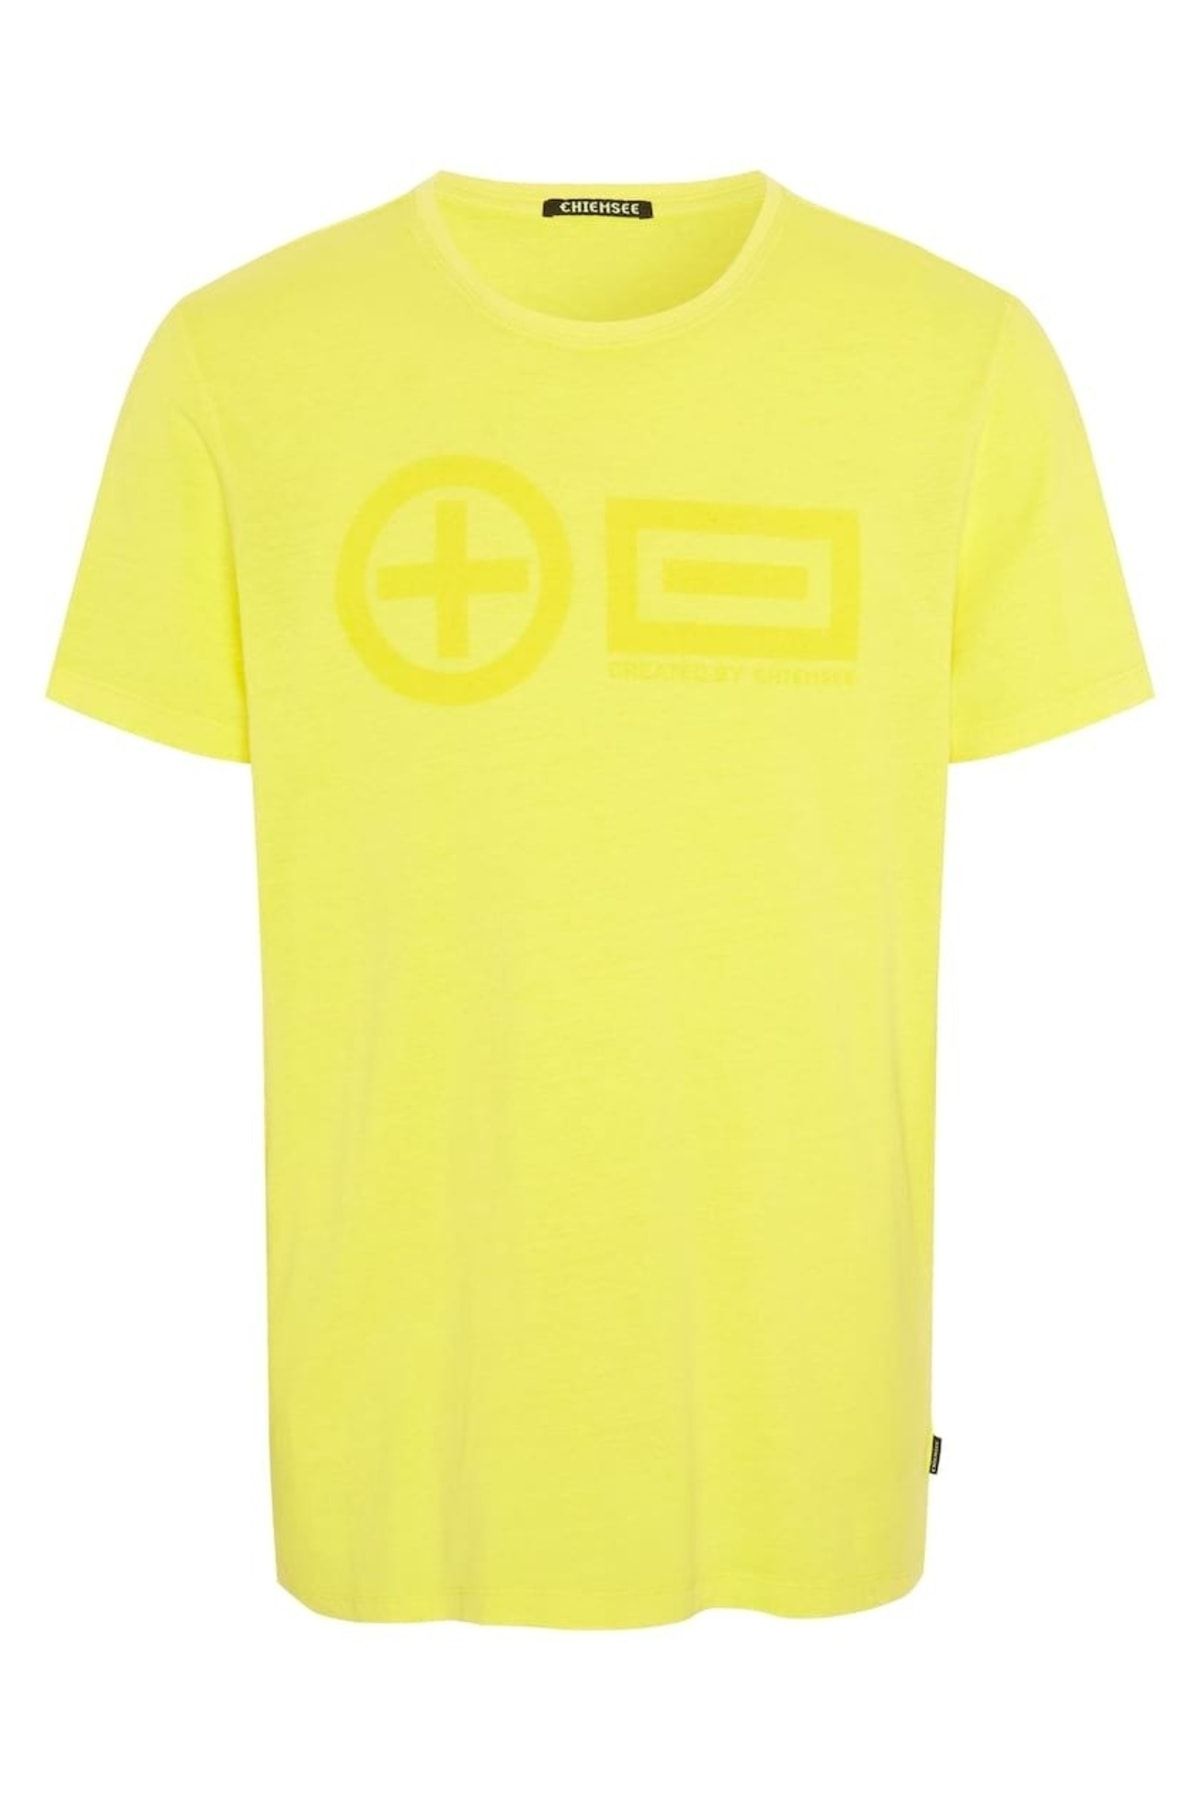 Chiemsee T-Shirt - Yellow - Regular fit - Trendyol